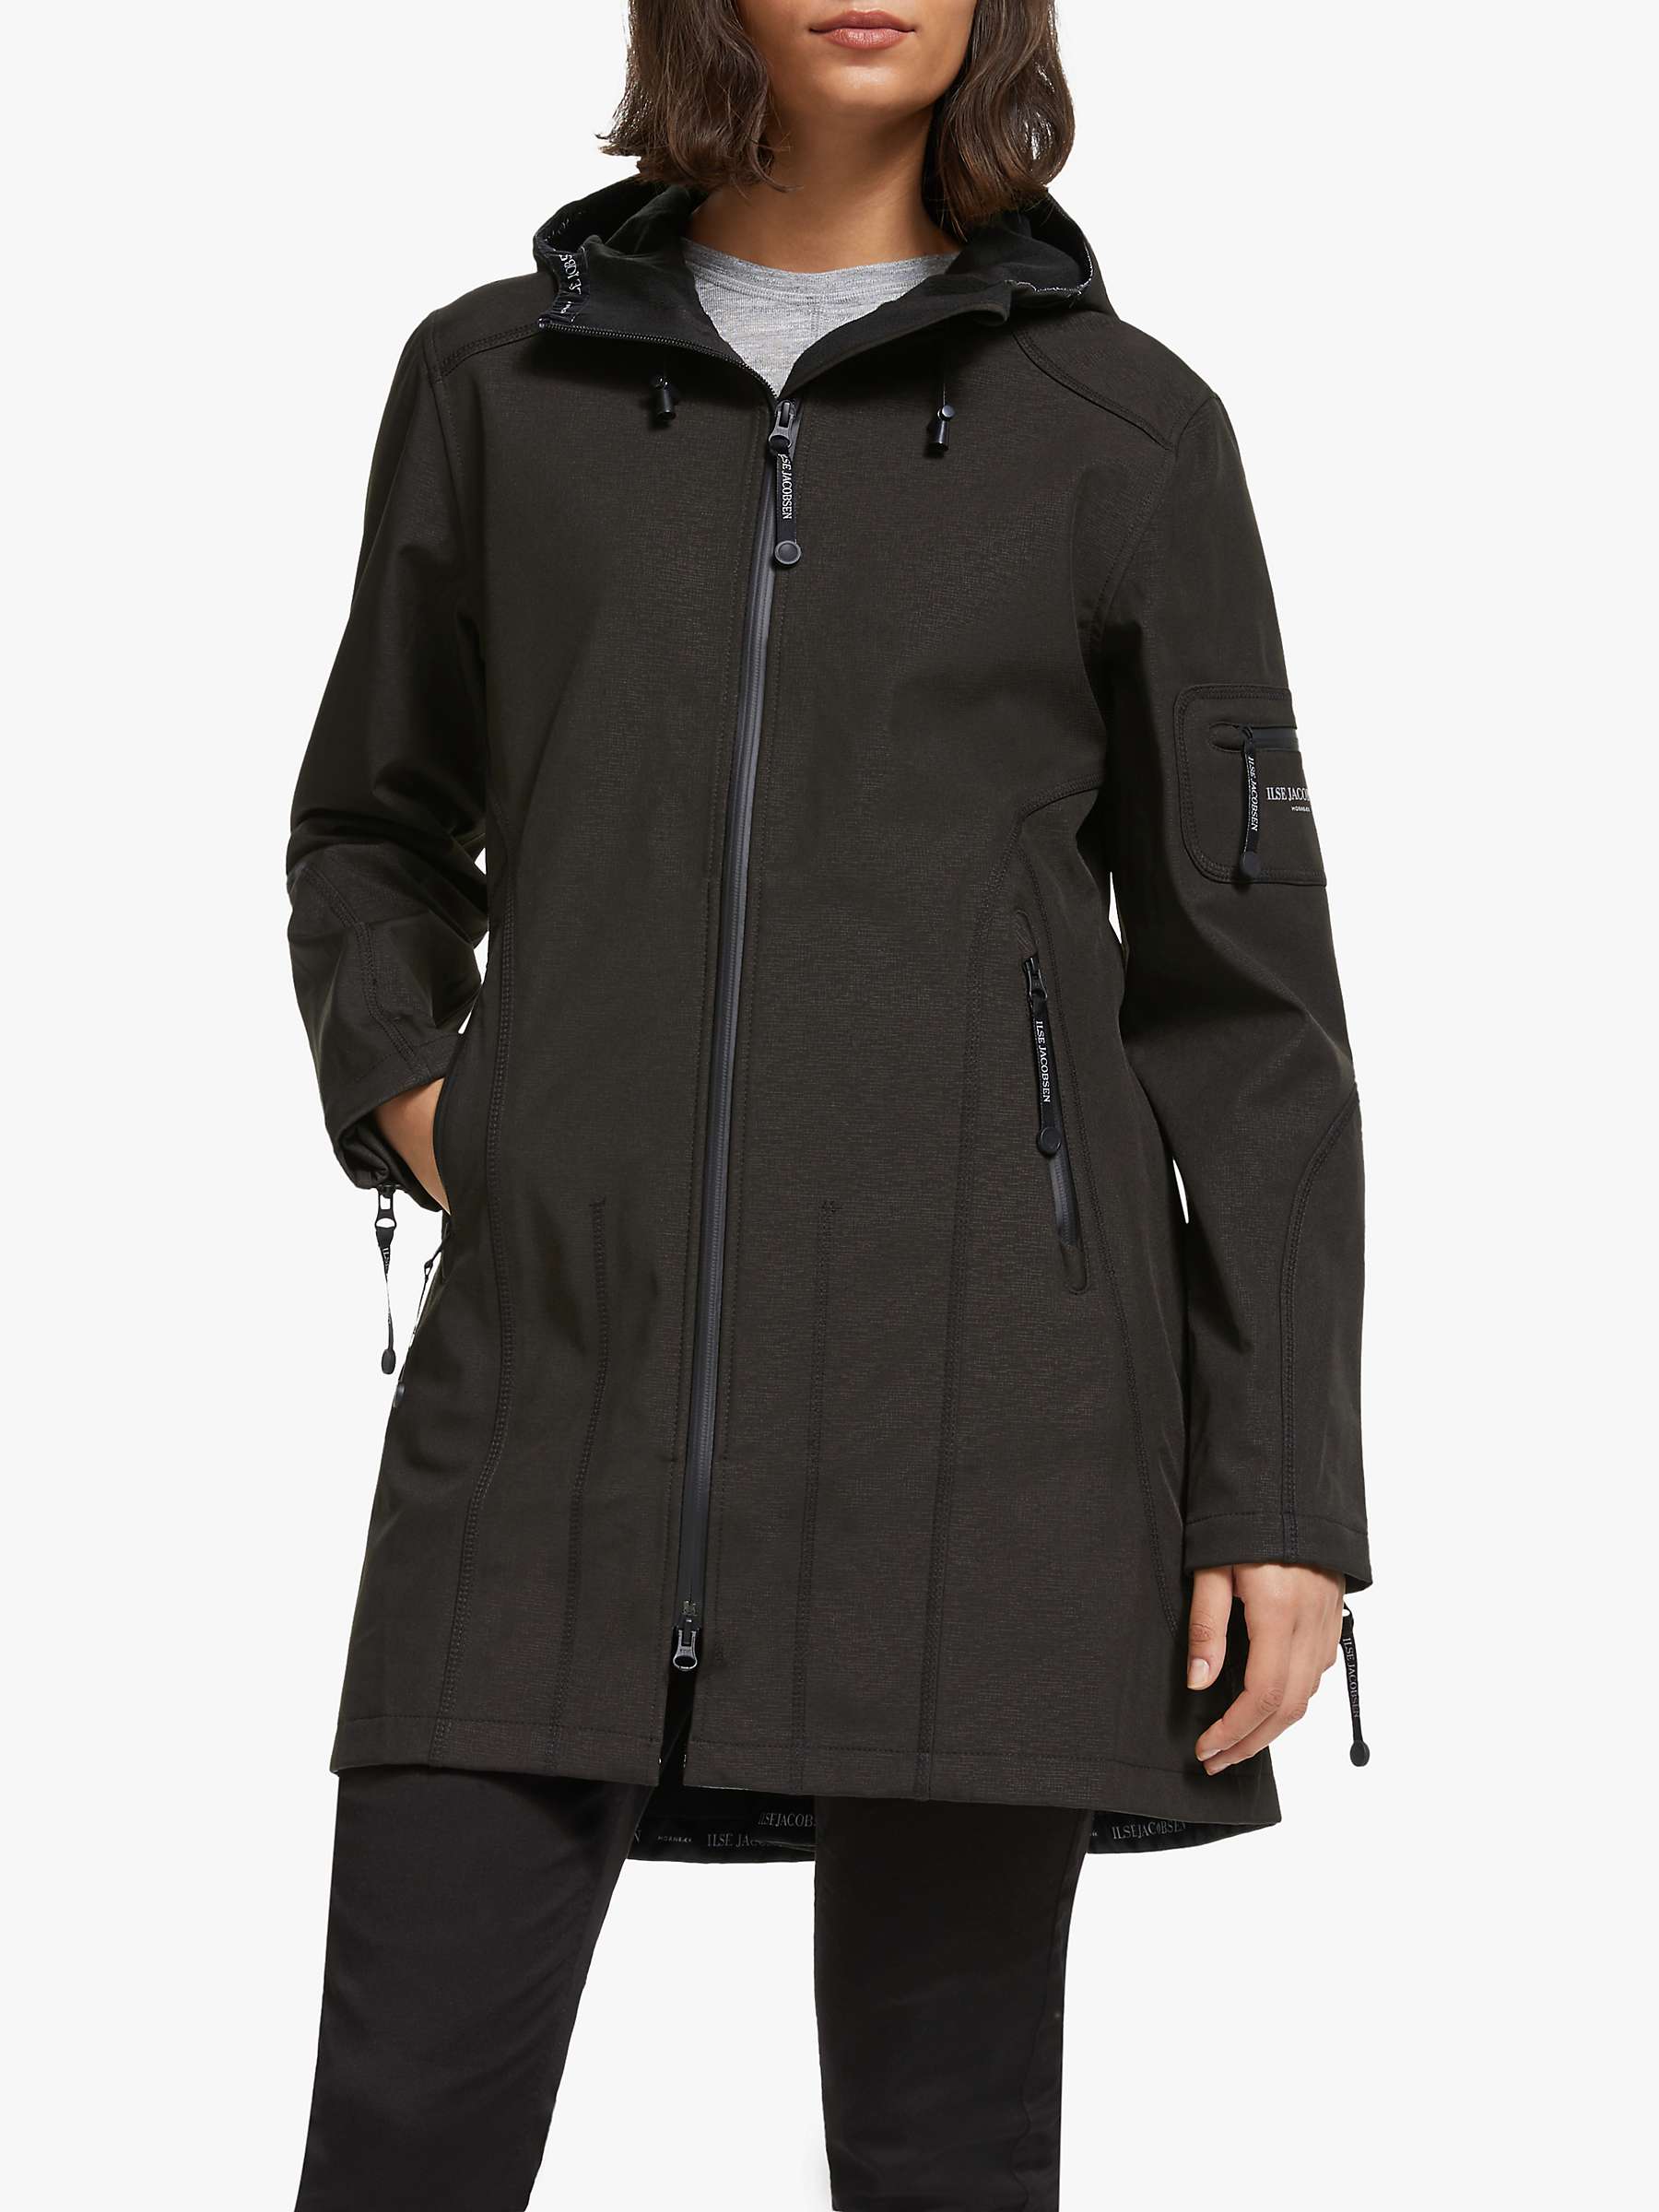 Ilse Jacobsen Hornbæk 3/4 Length Raincoat, Black at John Lewis u0026 Partners